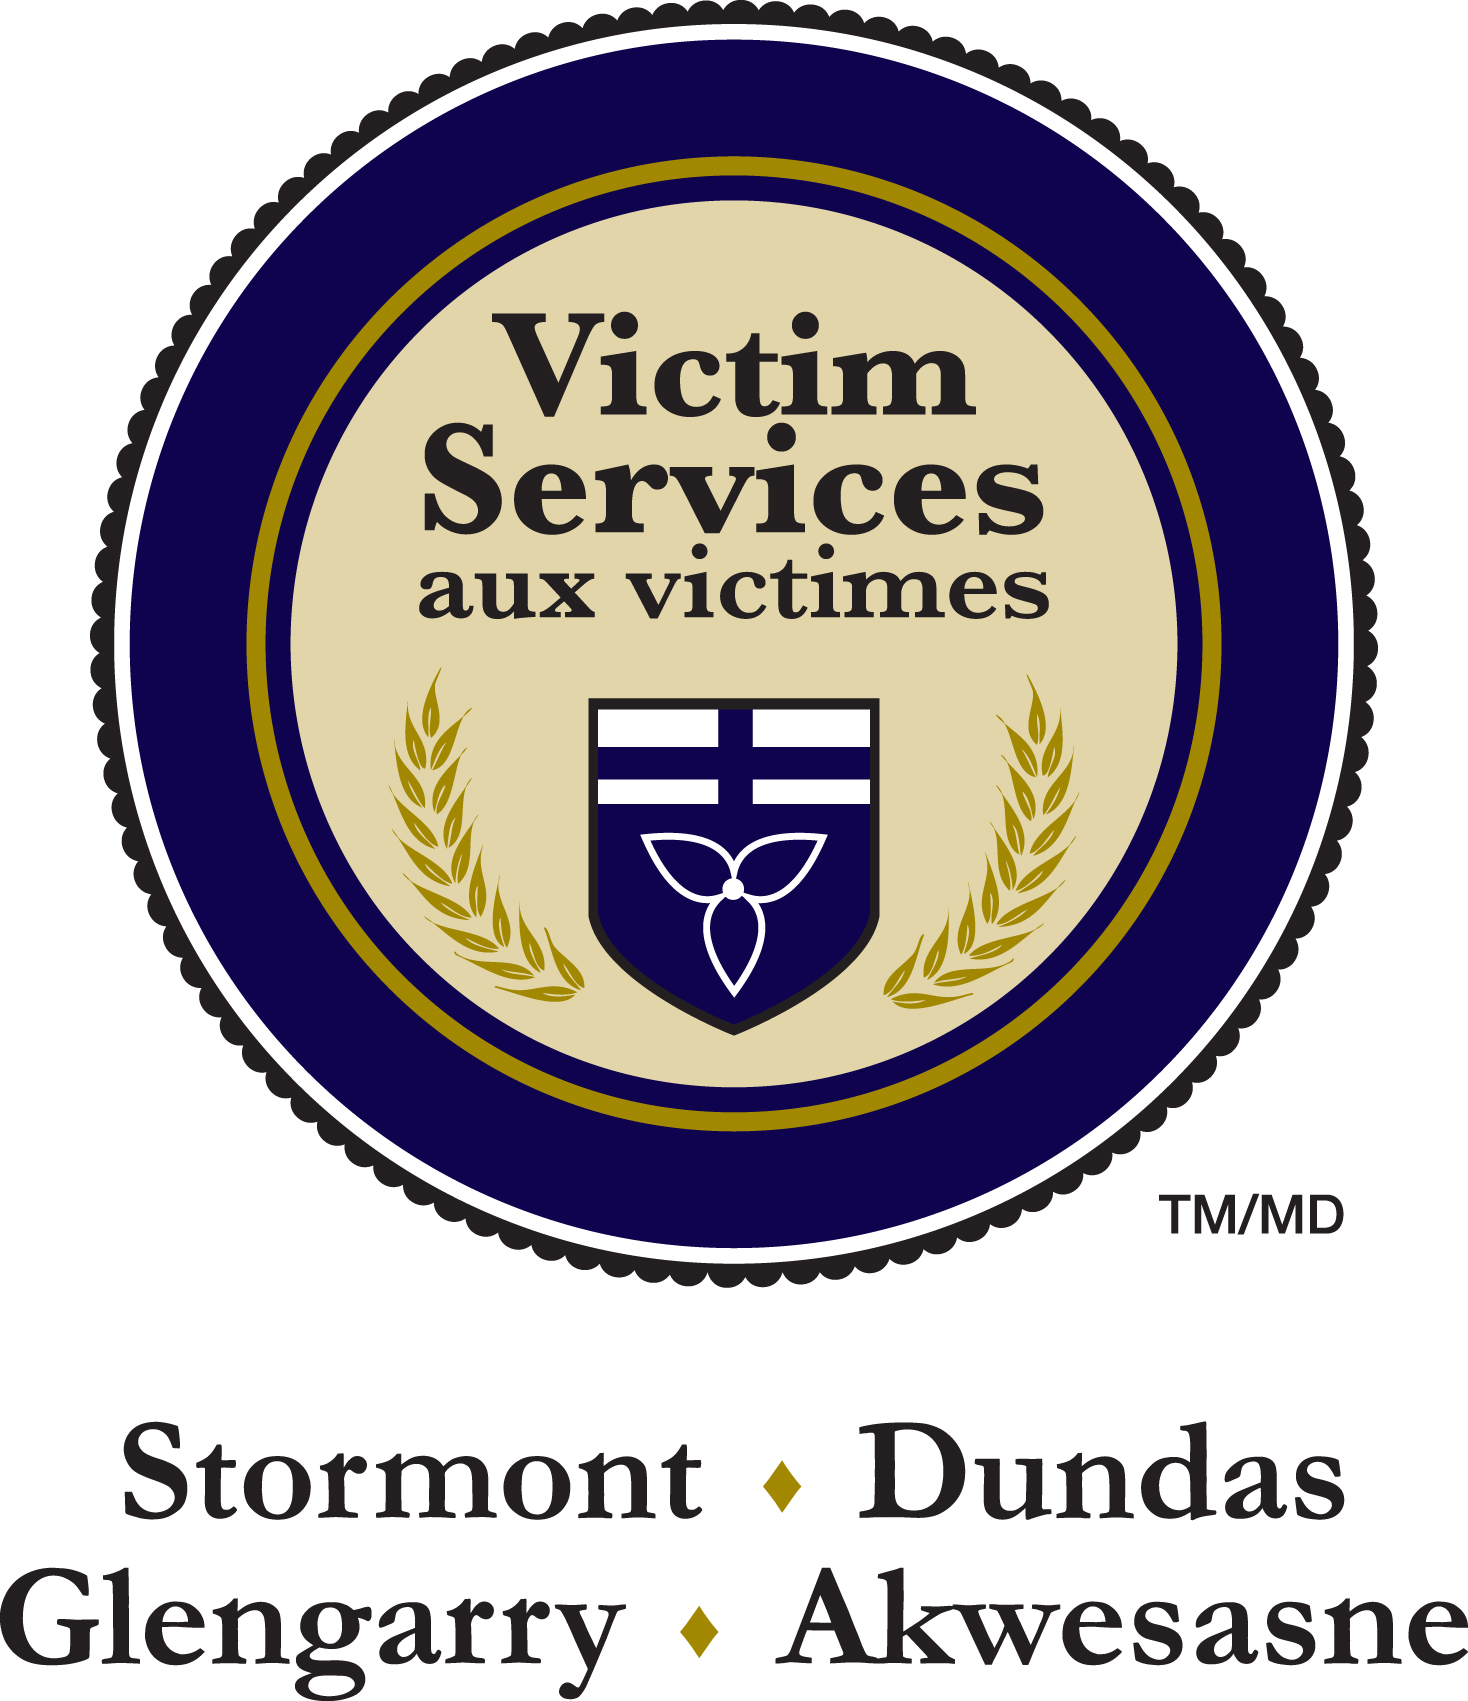 Victim Services of Stormont Dundas Glengarry & Akwesasne